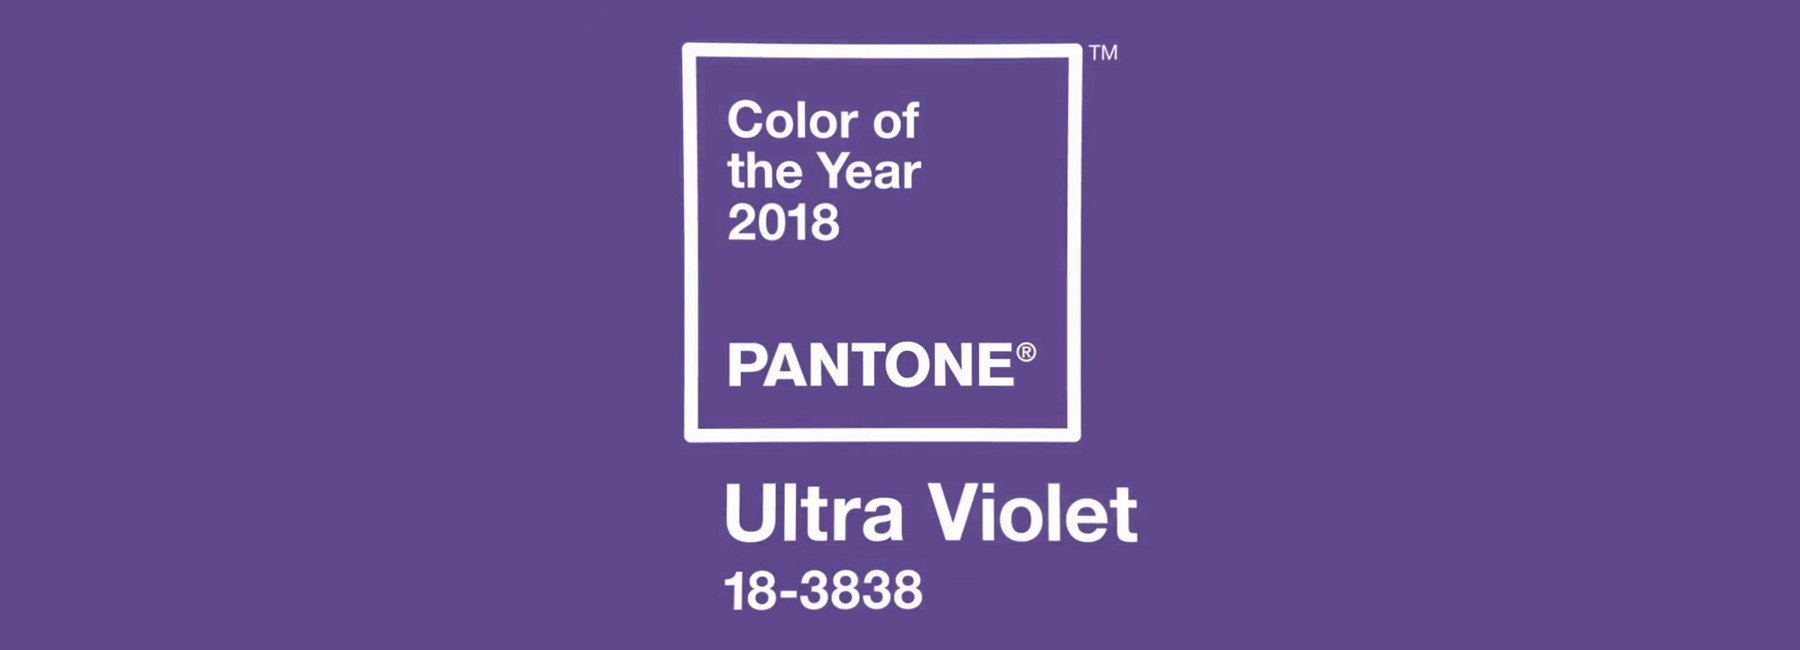 pantone-color-of-the-year-2018-ultra-violet-designboom-1800.jpg